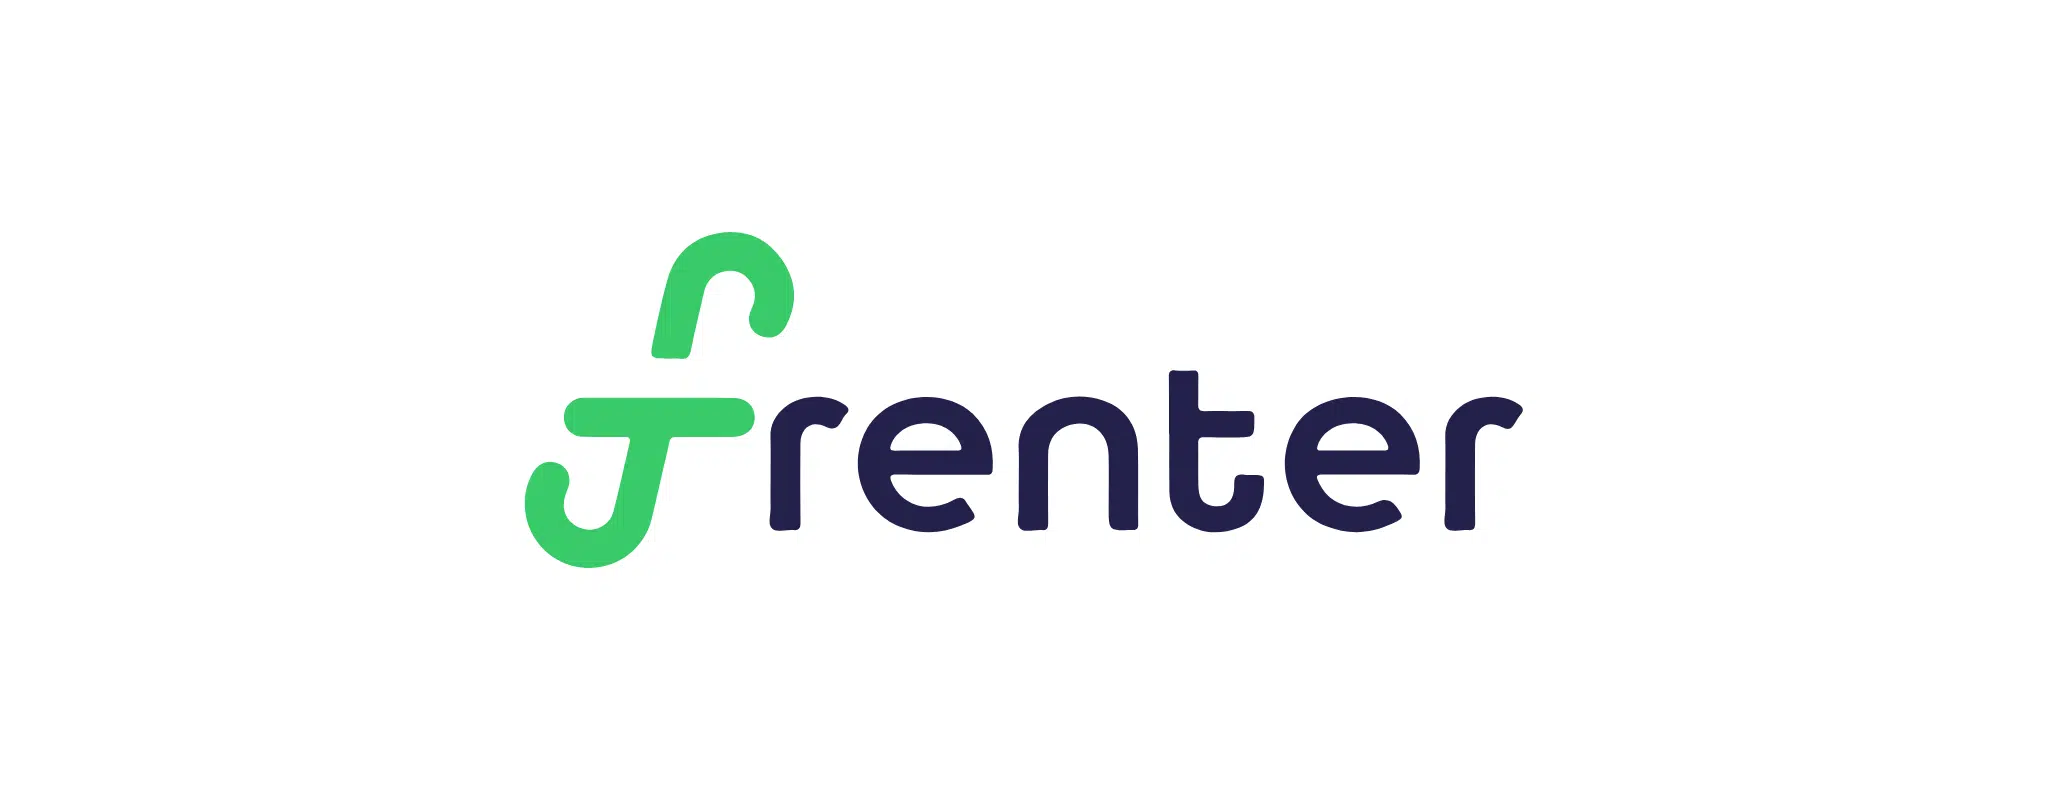 Halifax startup Frenter - logo